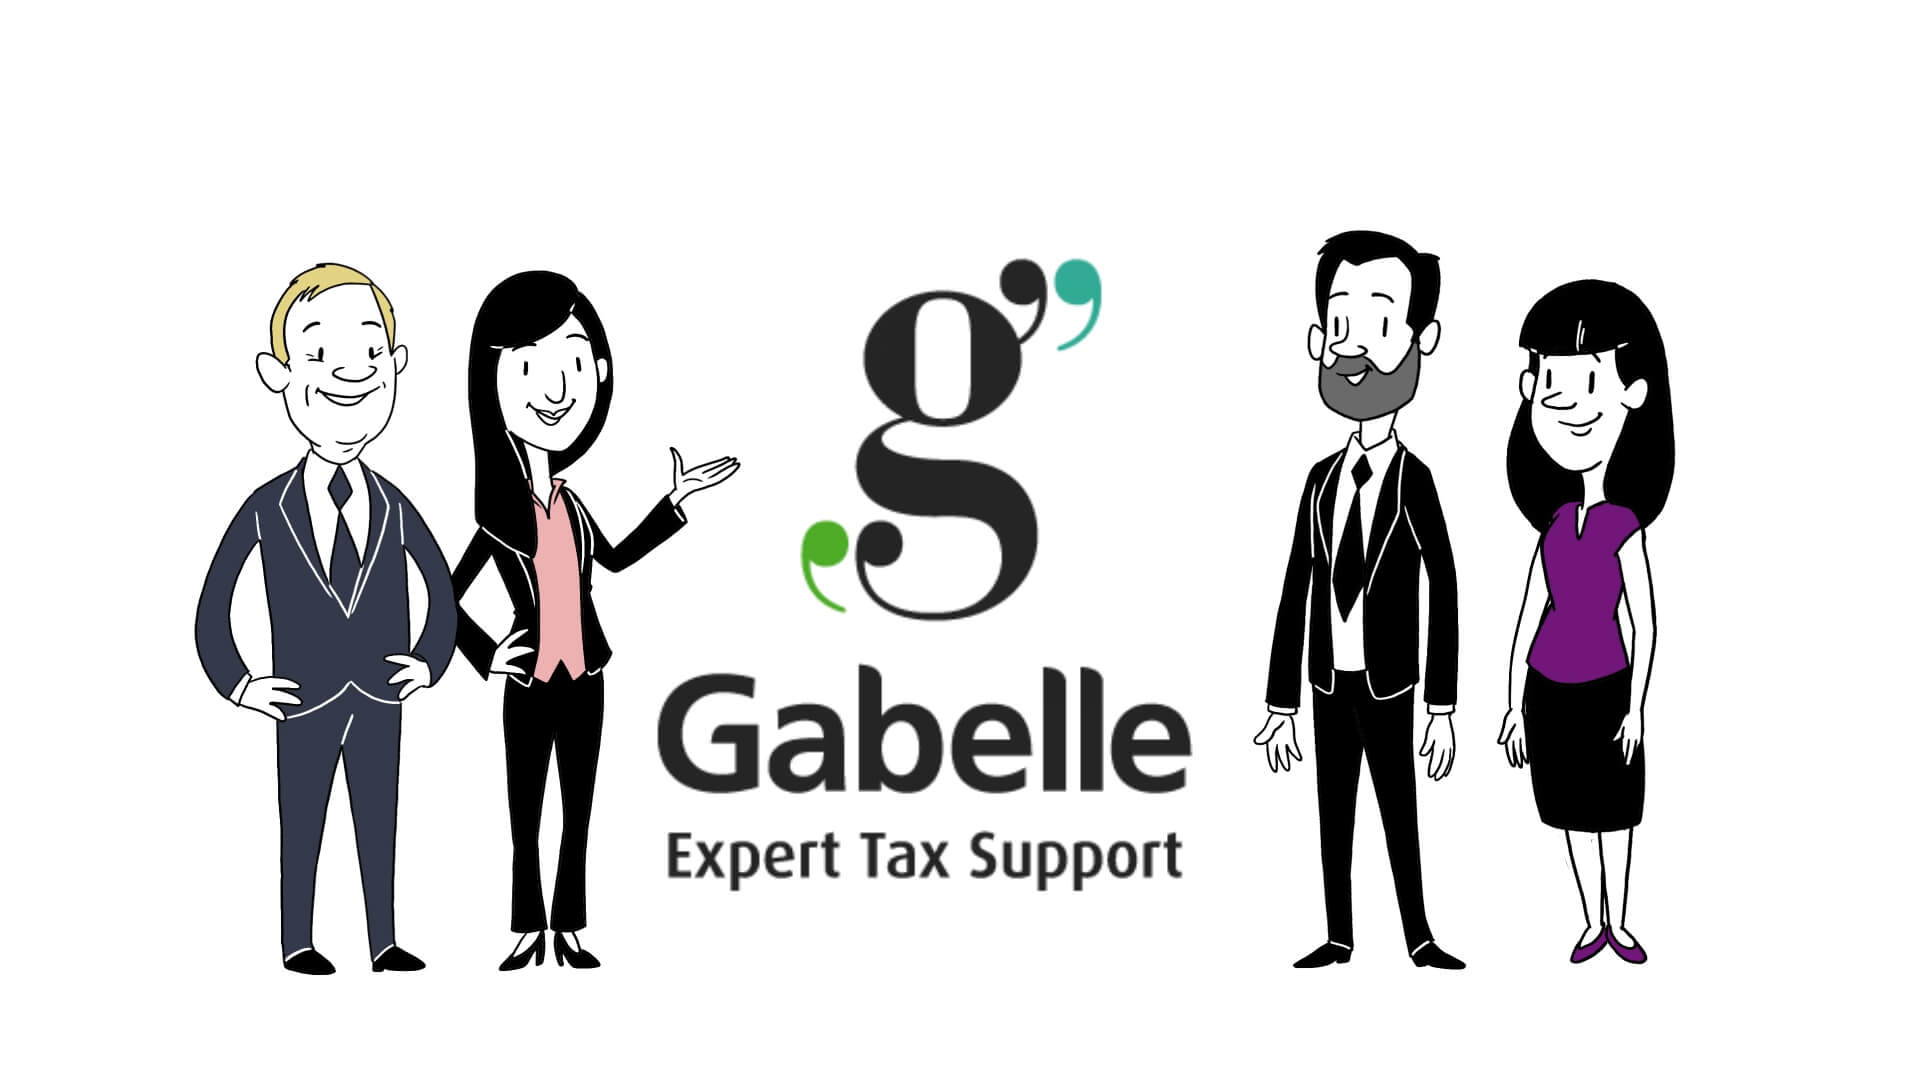 Gabelle customer journey project image 3